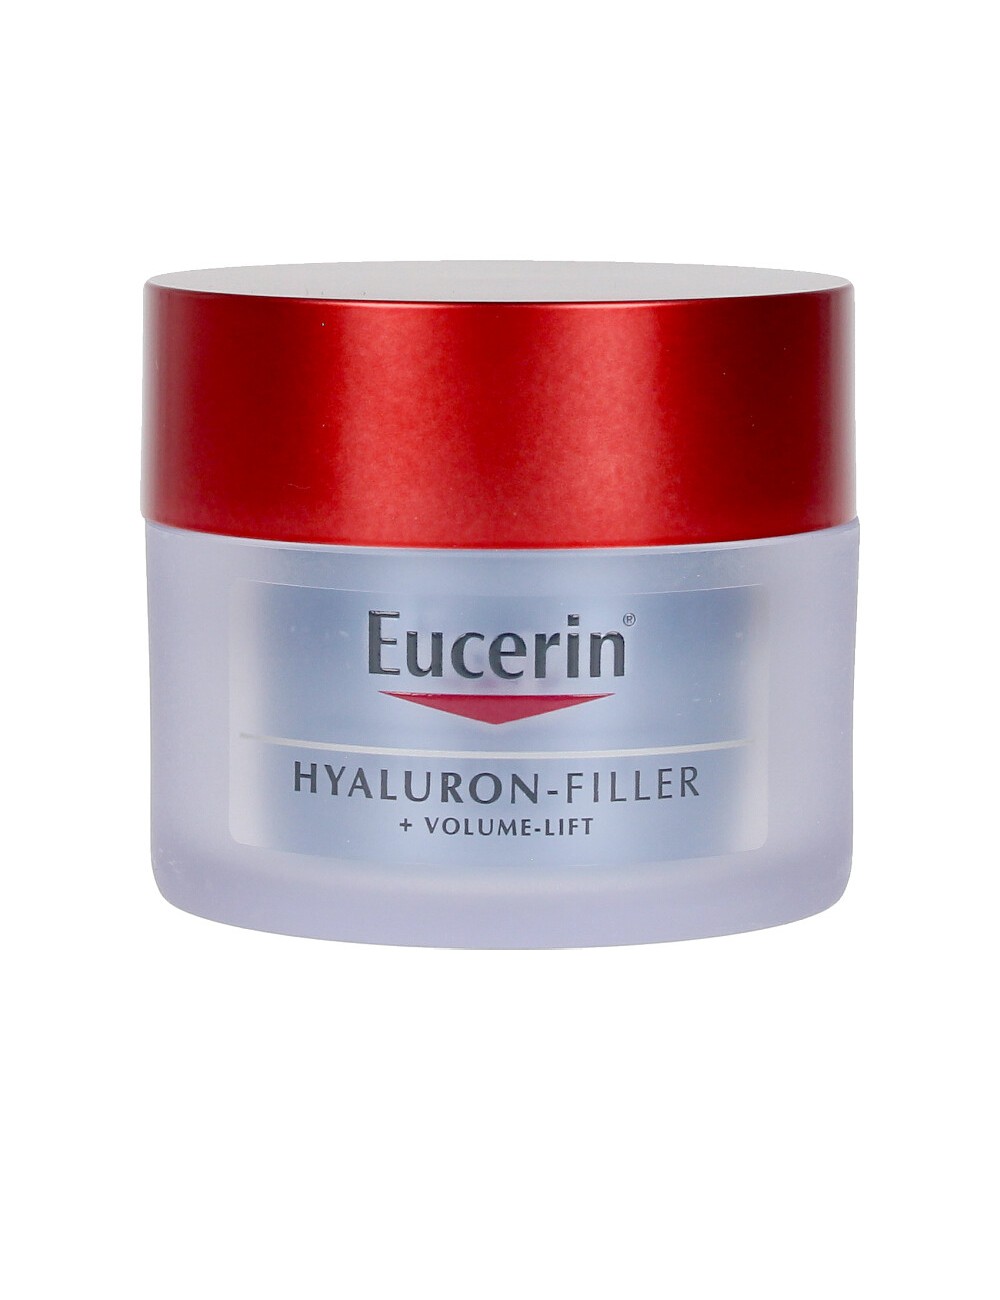 HYALURON-FILLER +Volume-Lift crème de nuit 50 ml